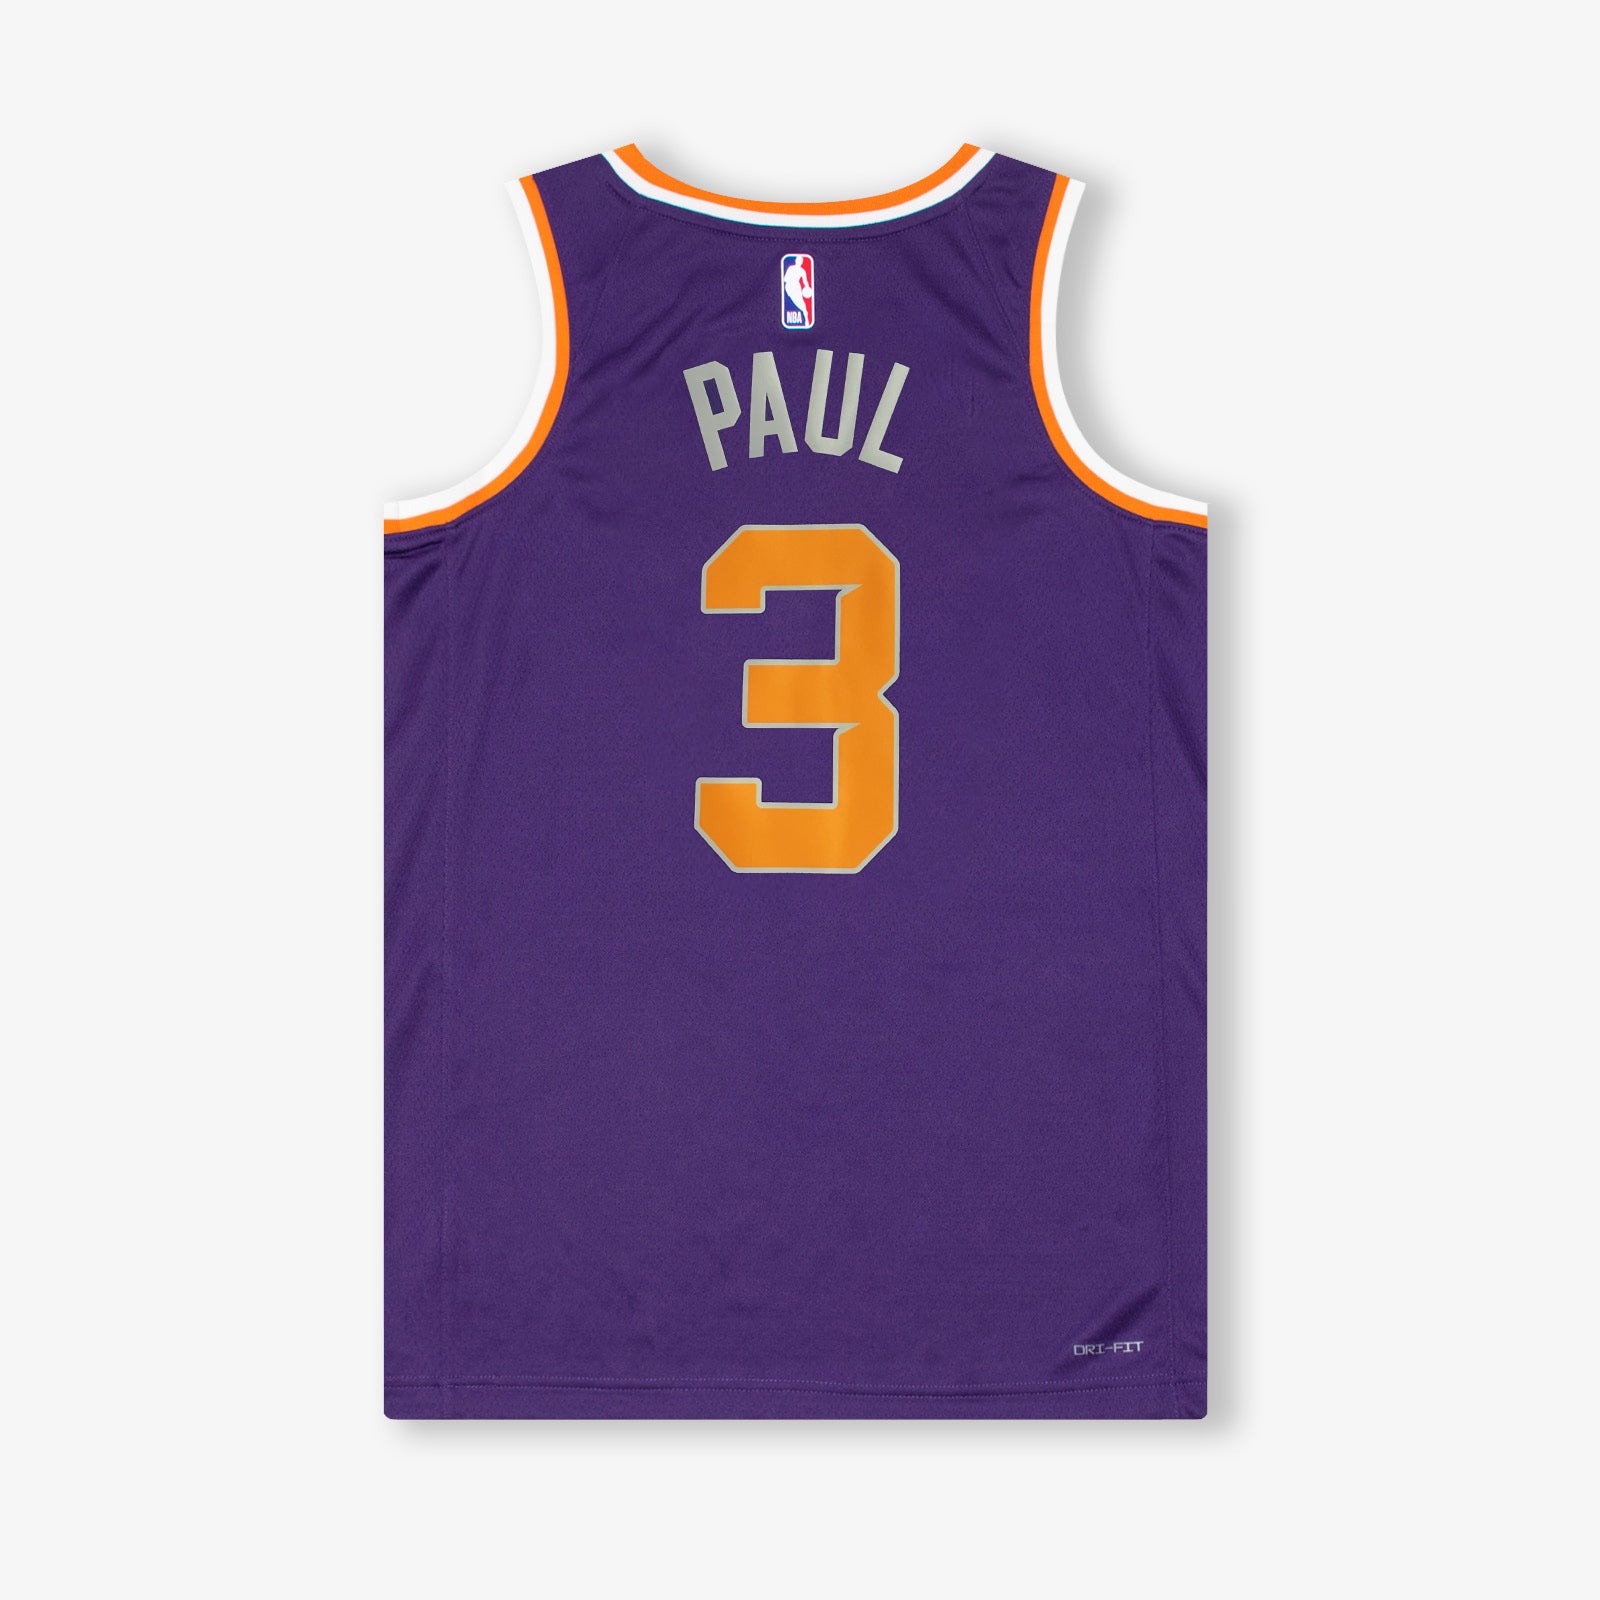 Phoenix Suns Chris Paul Jerseys, Chris Paul Shirts, Chris Paul